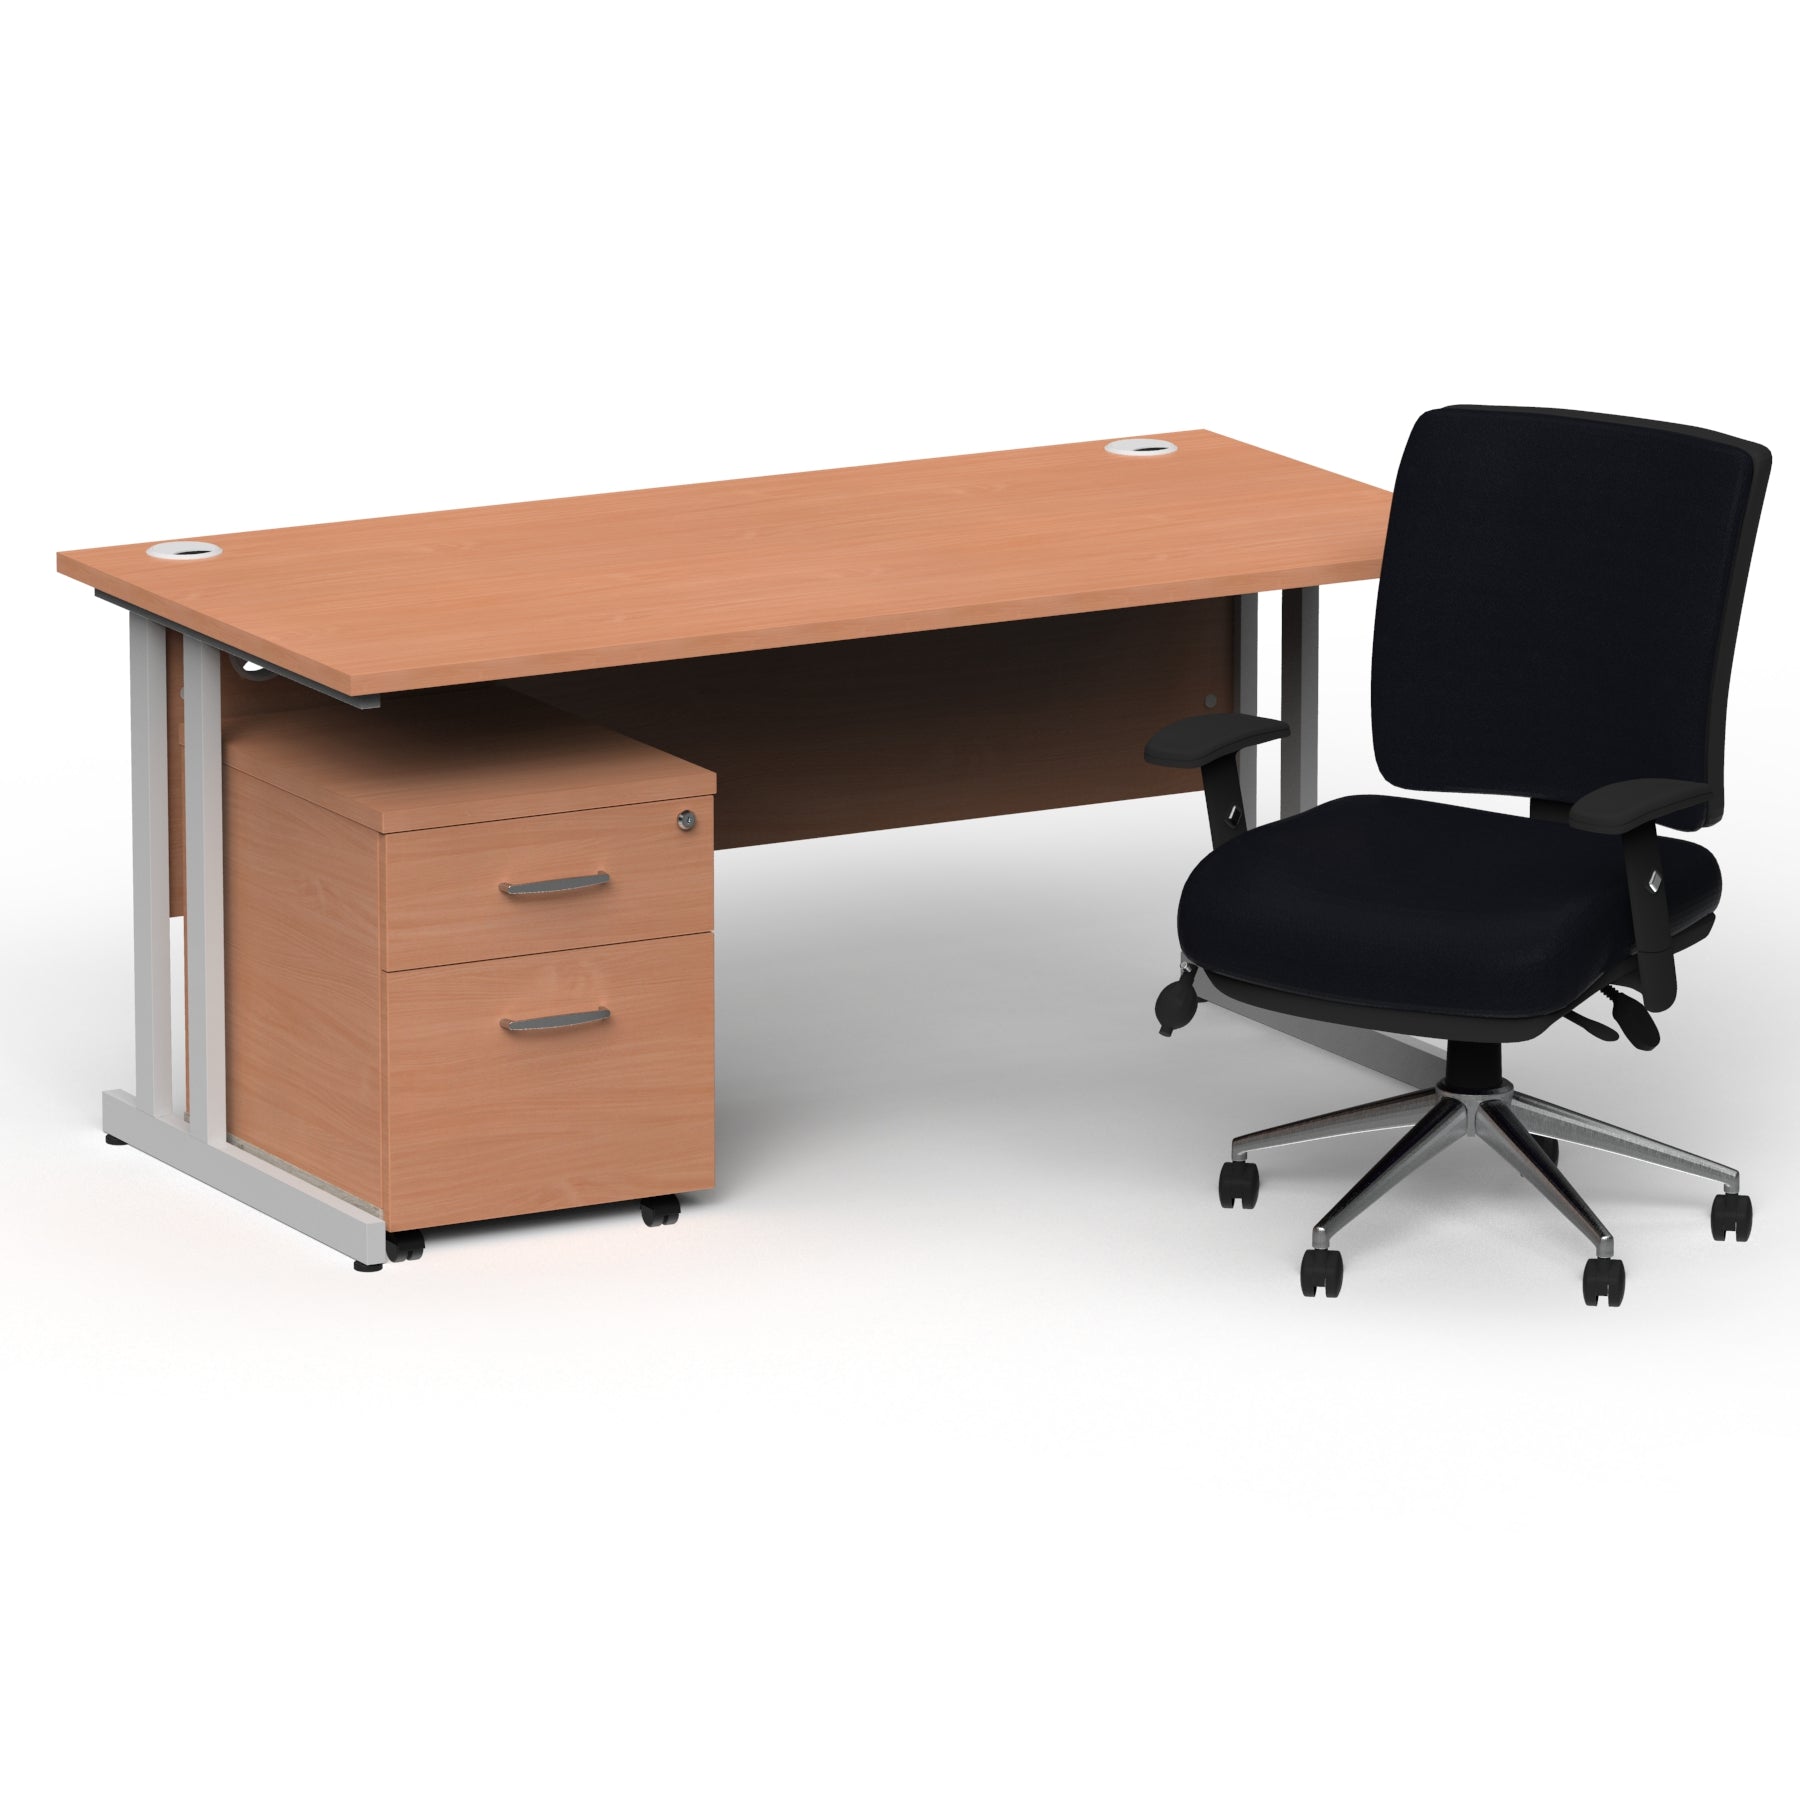 Impulse 1600mm Cantilever Desk & Mobile Pedestal with Chiro Medium Back Black Operator Chair - 5-Year Furniture Guarantee